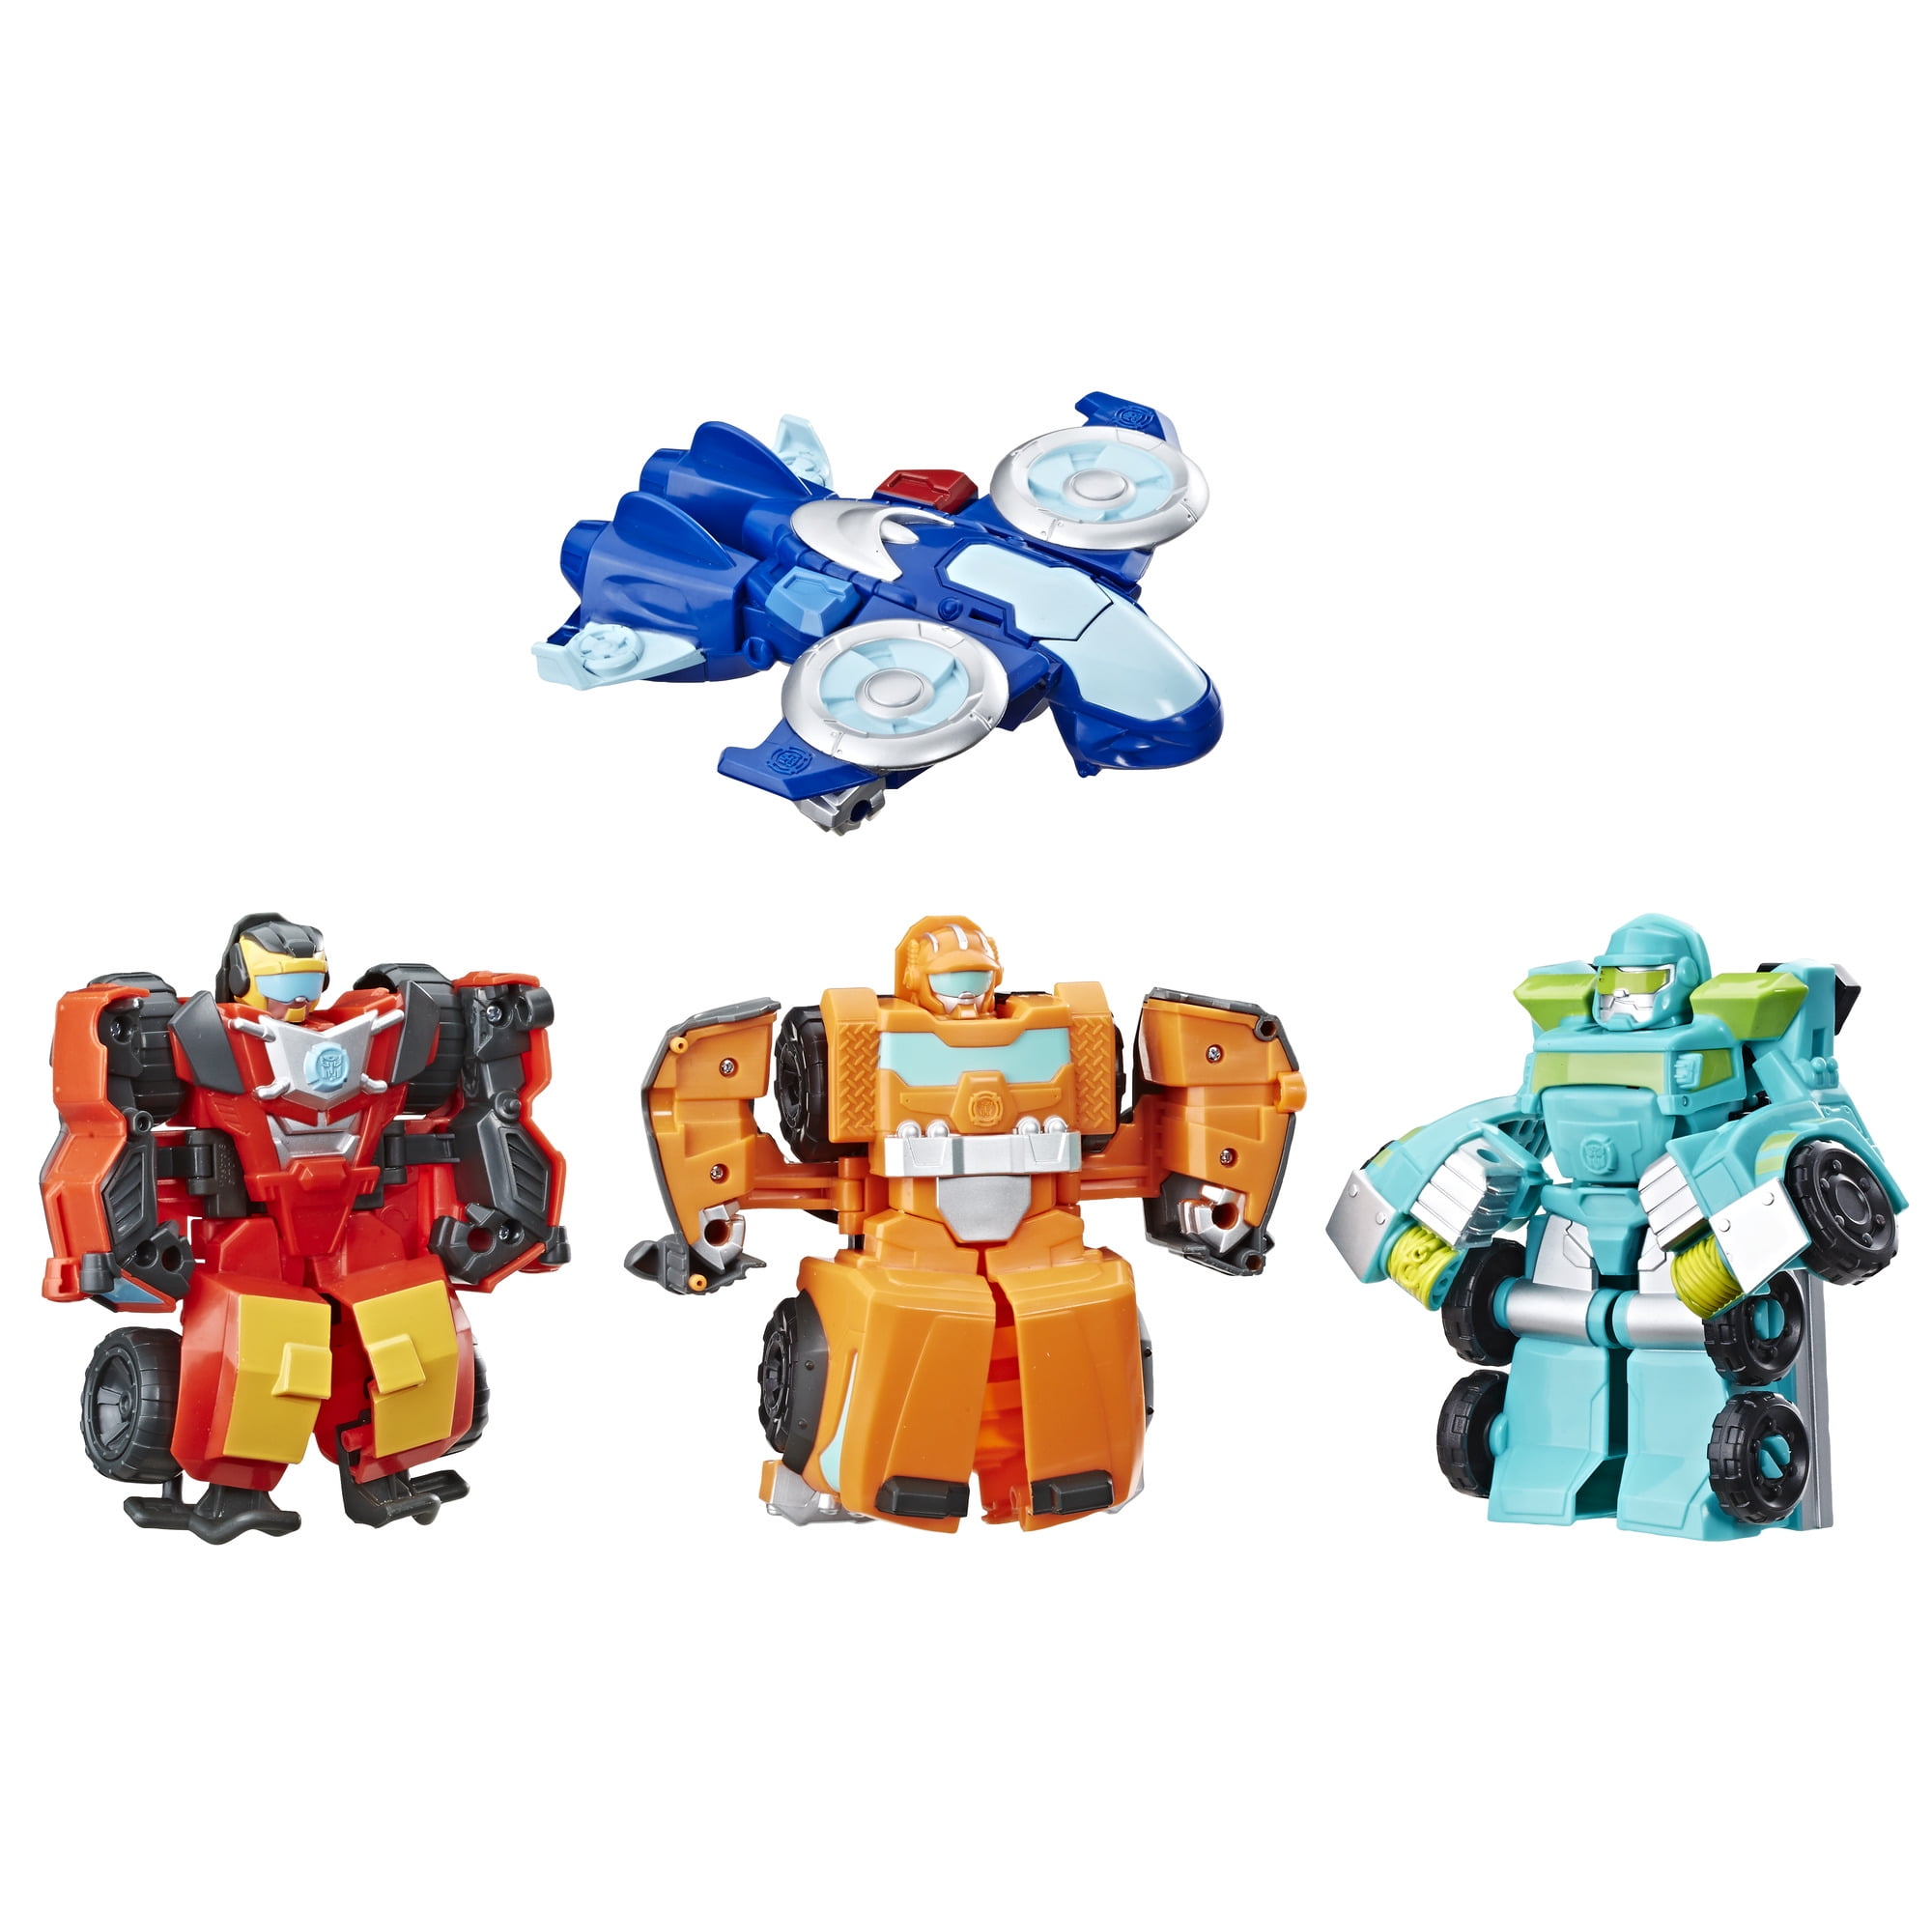 Transformers Playskool Heroes Rescue Bots Academy Rescue Team Figure Sets